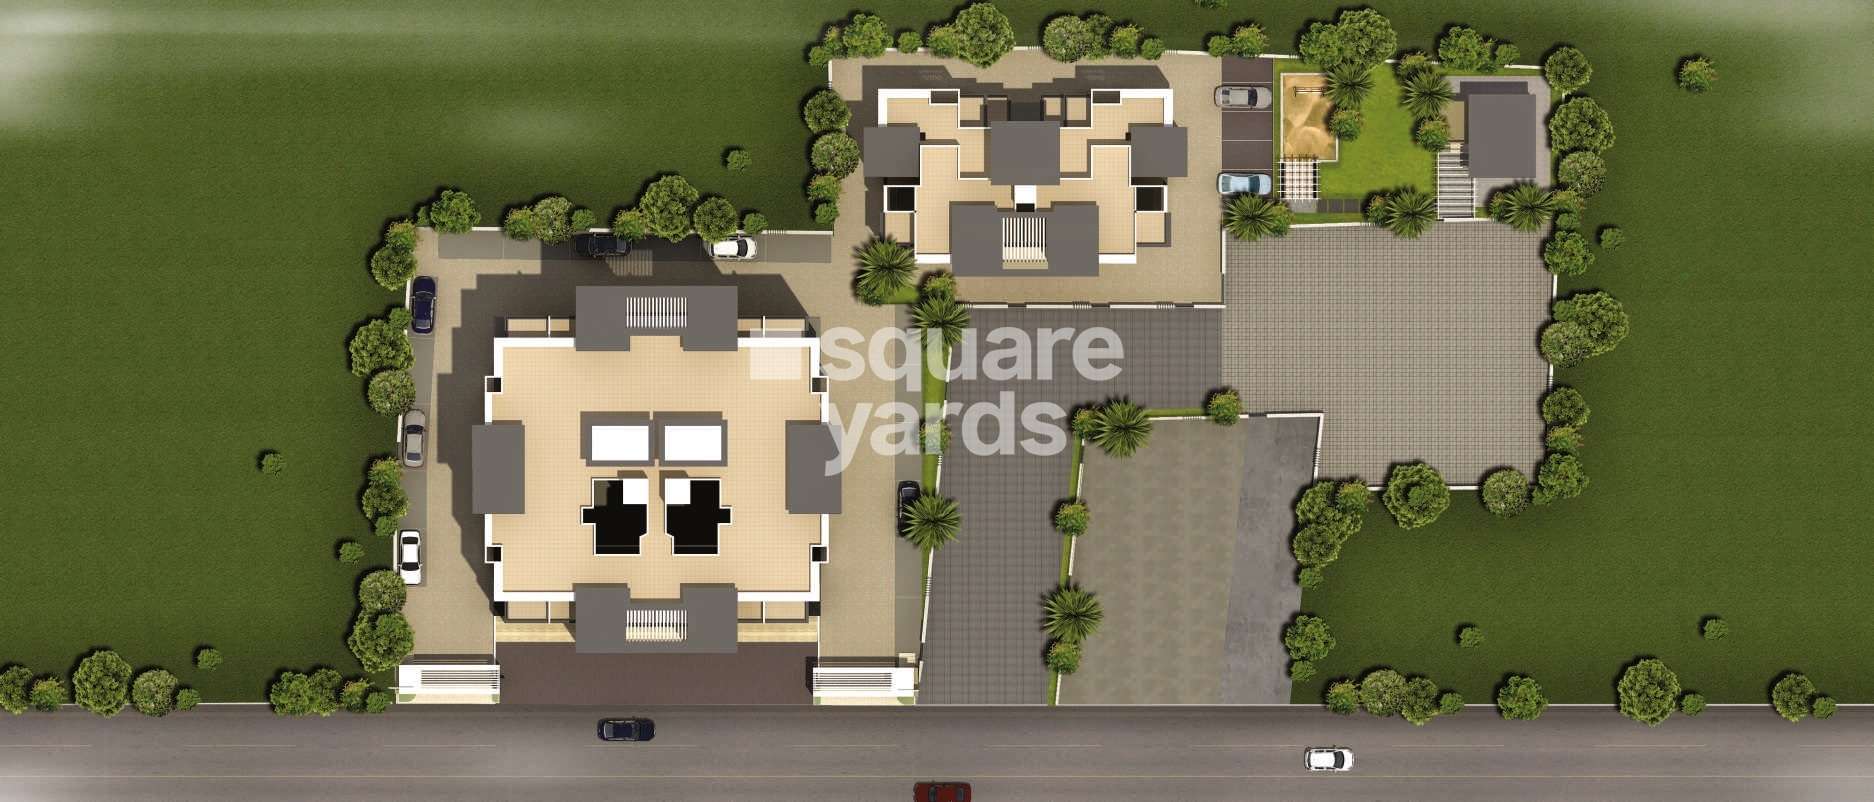 urban castle royale master plan image5